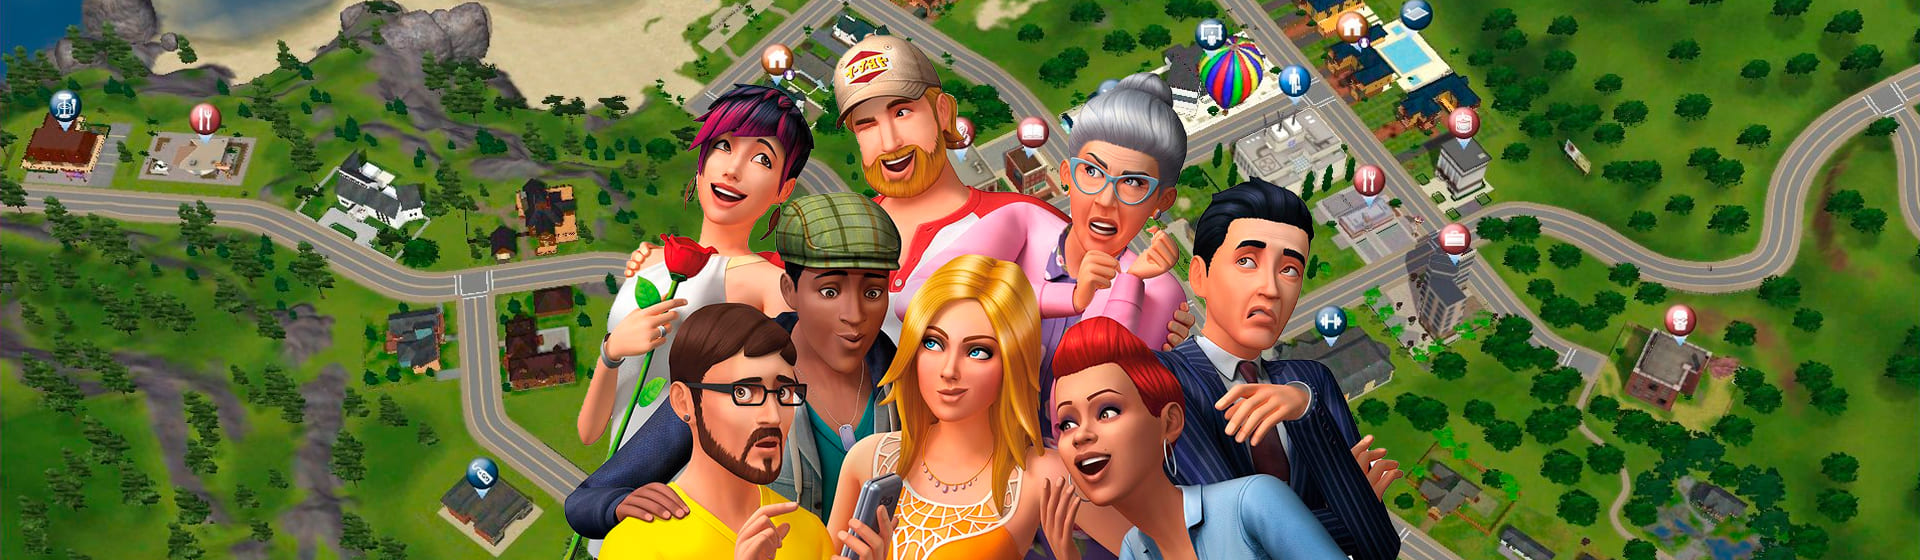 The Sims - Мерч и одежда с атрибутикой